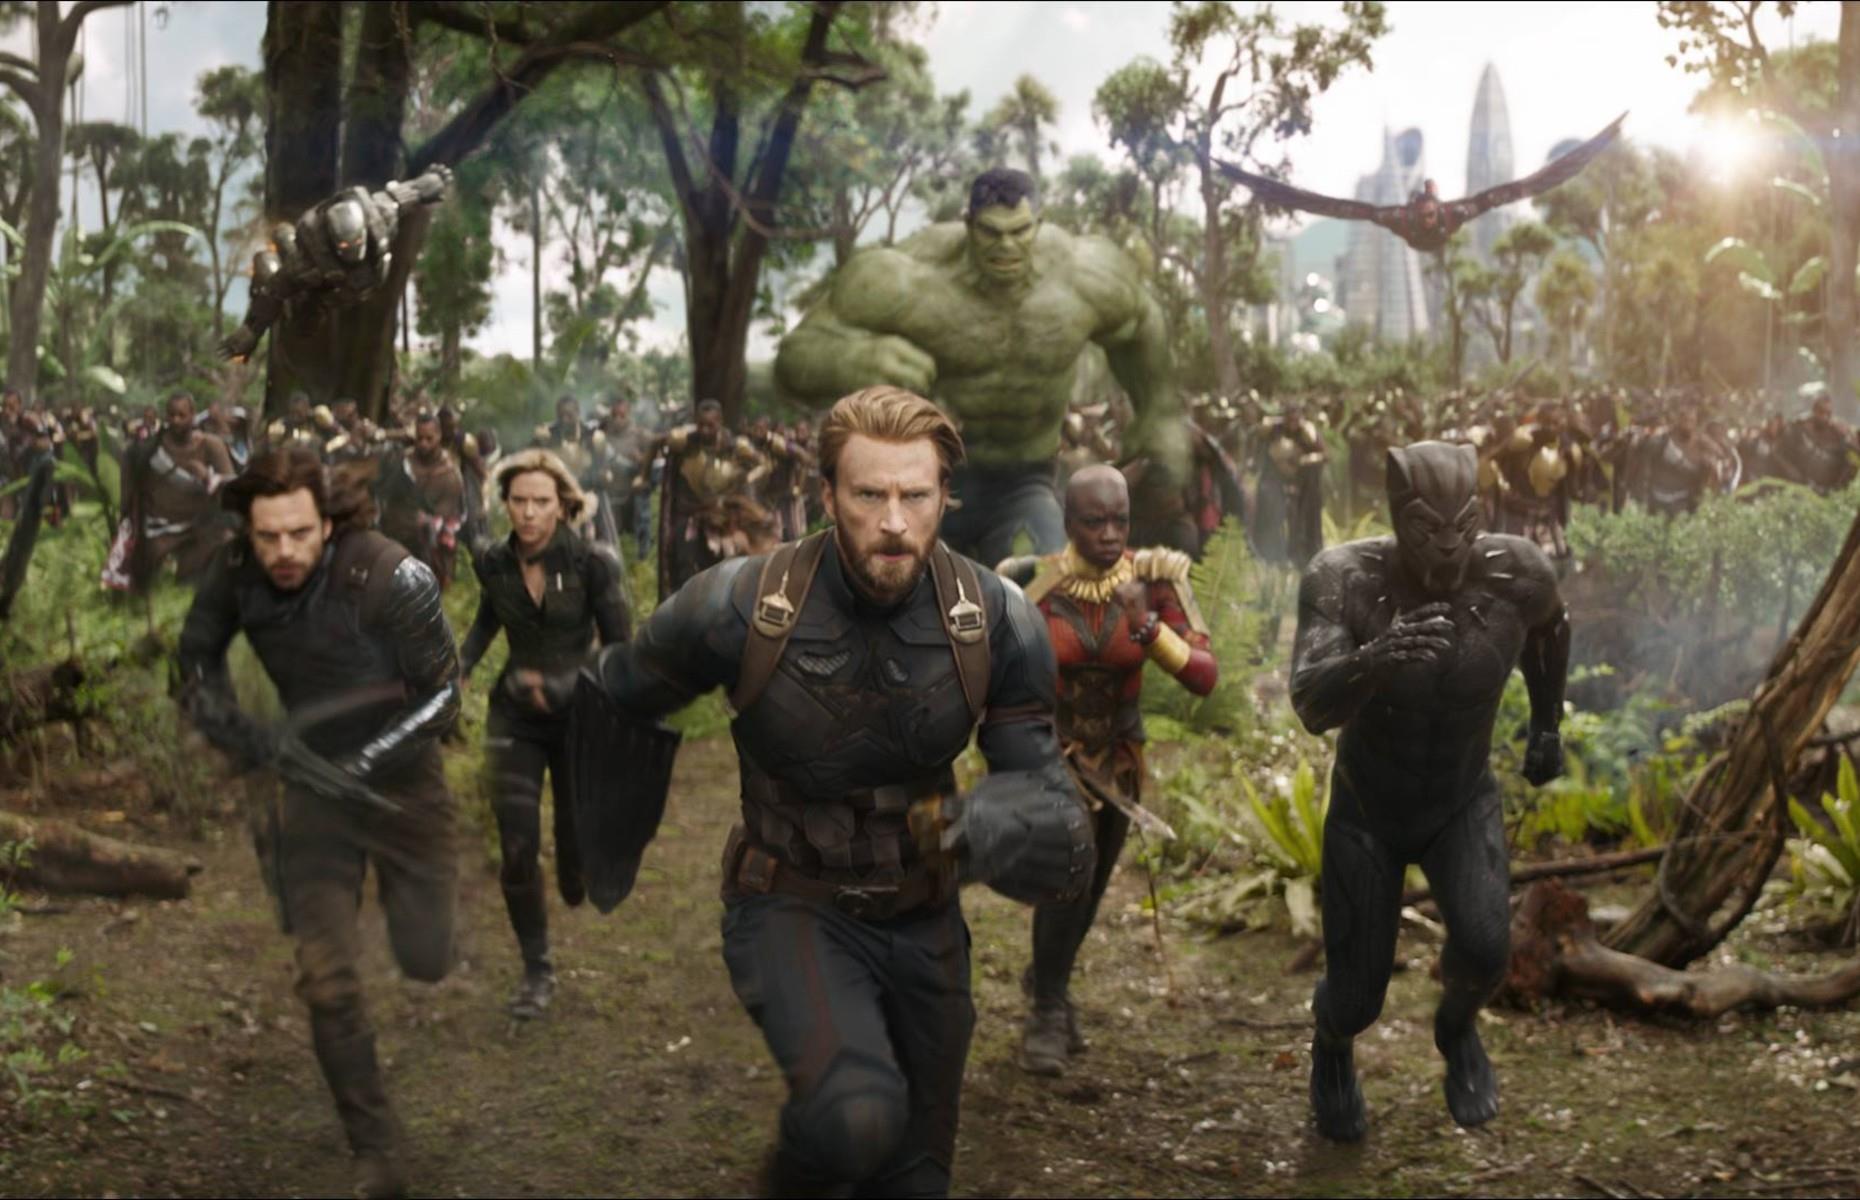 3rd. Avengers: Infinity War (2018) – $325 million (£230m)